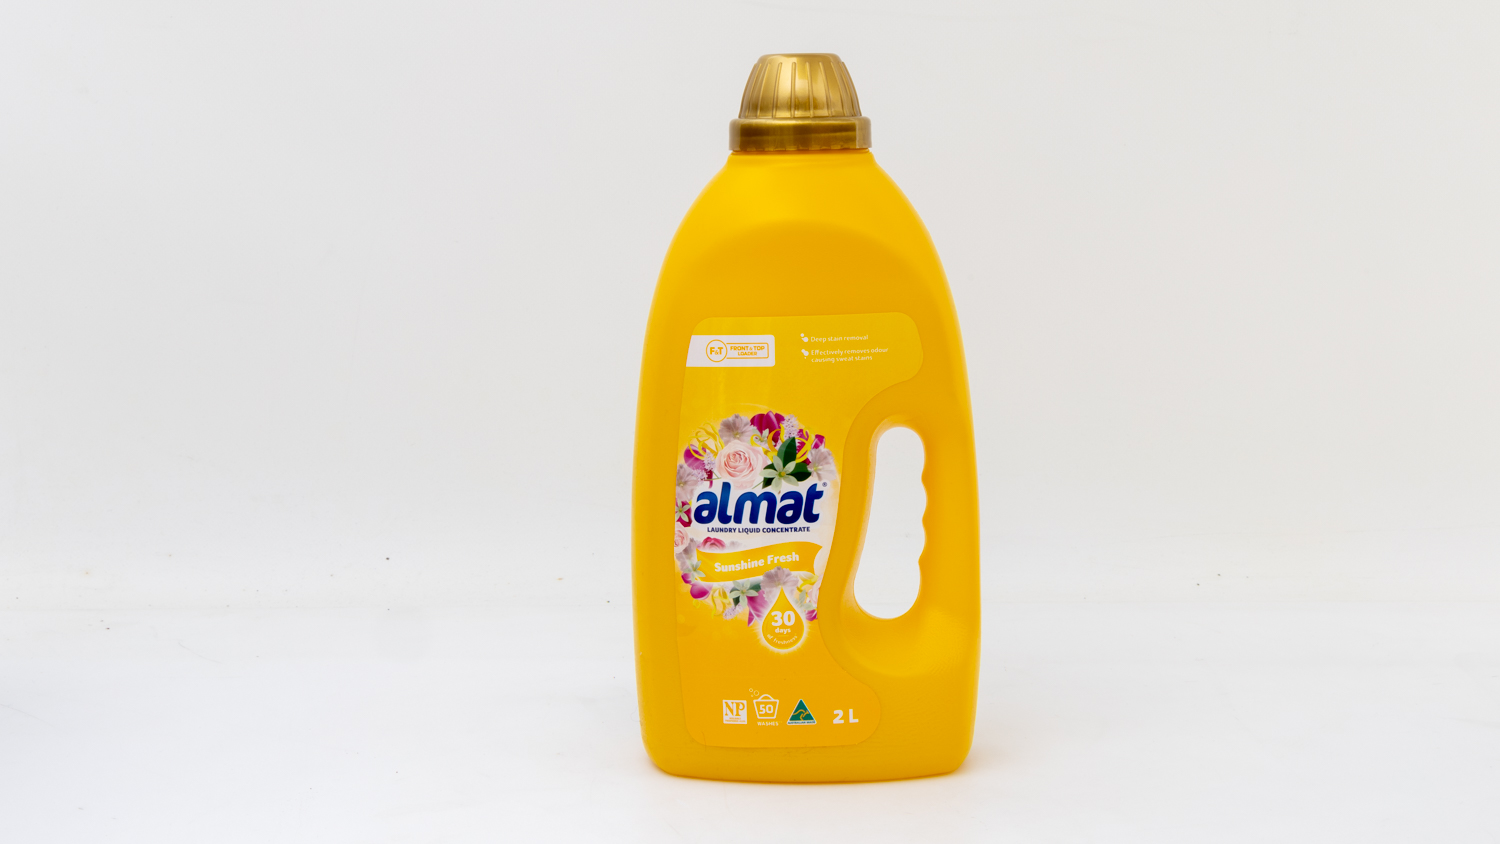 Aldi Almat Laundry Liquid Concentrate Sunshine Fresh Top Loader carousel image